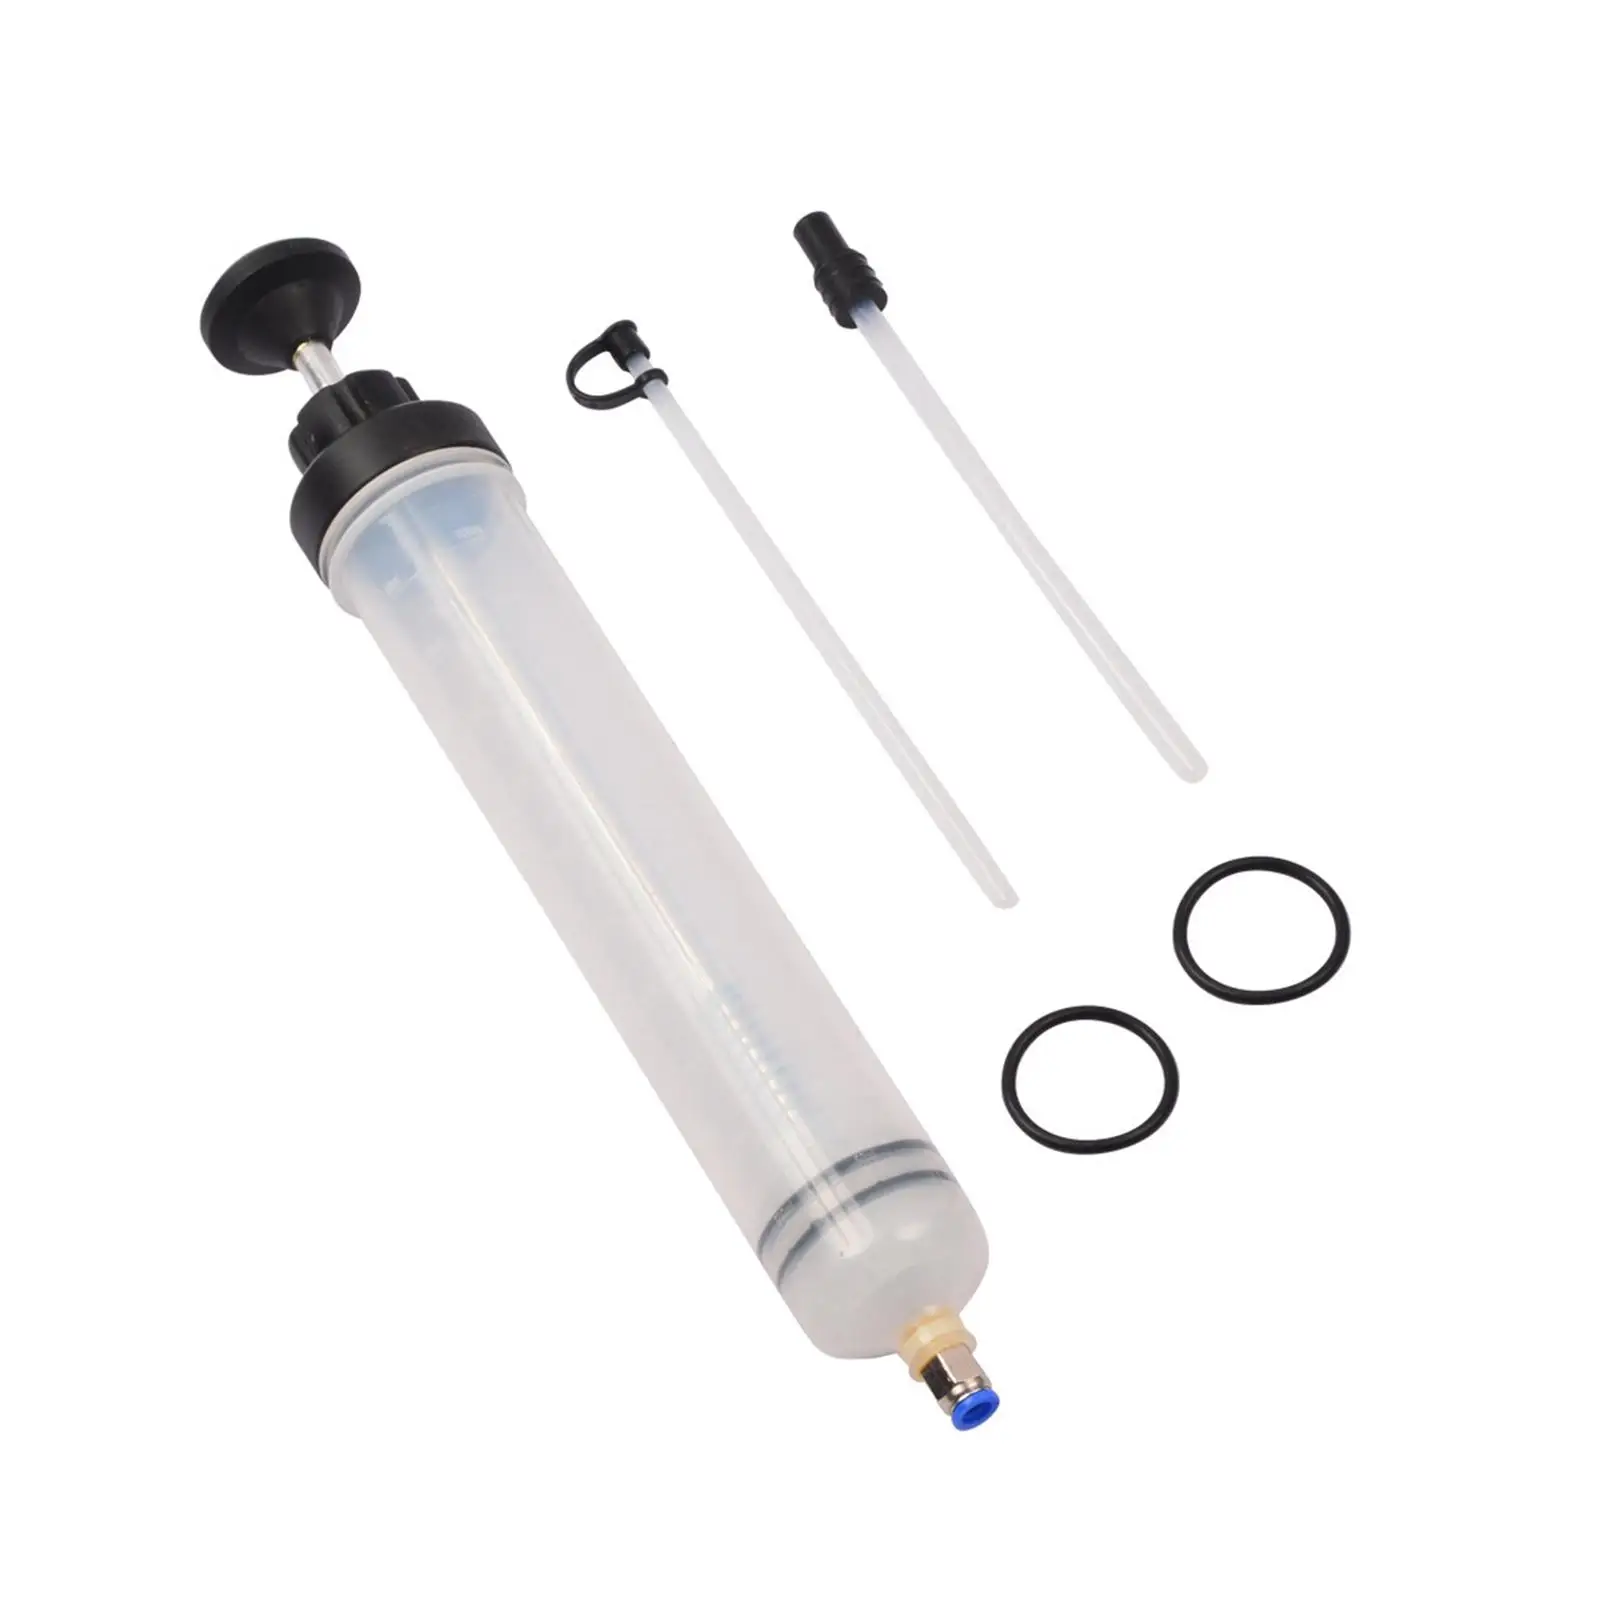 Oil Suction Syringe Manual Oil Extractor Pump Manual Automotive Transfer Pump for Antifreeze Fluid Transmission Oil Coolant